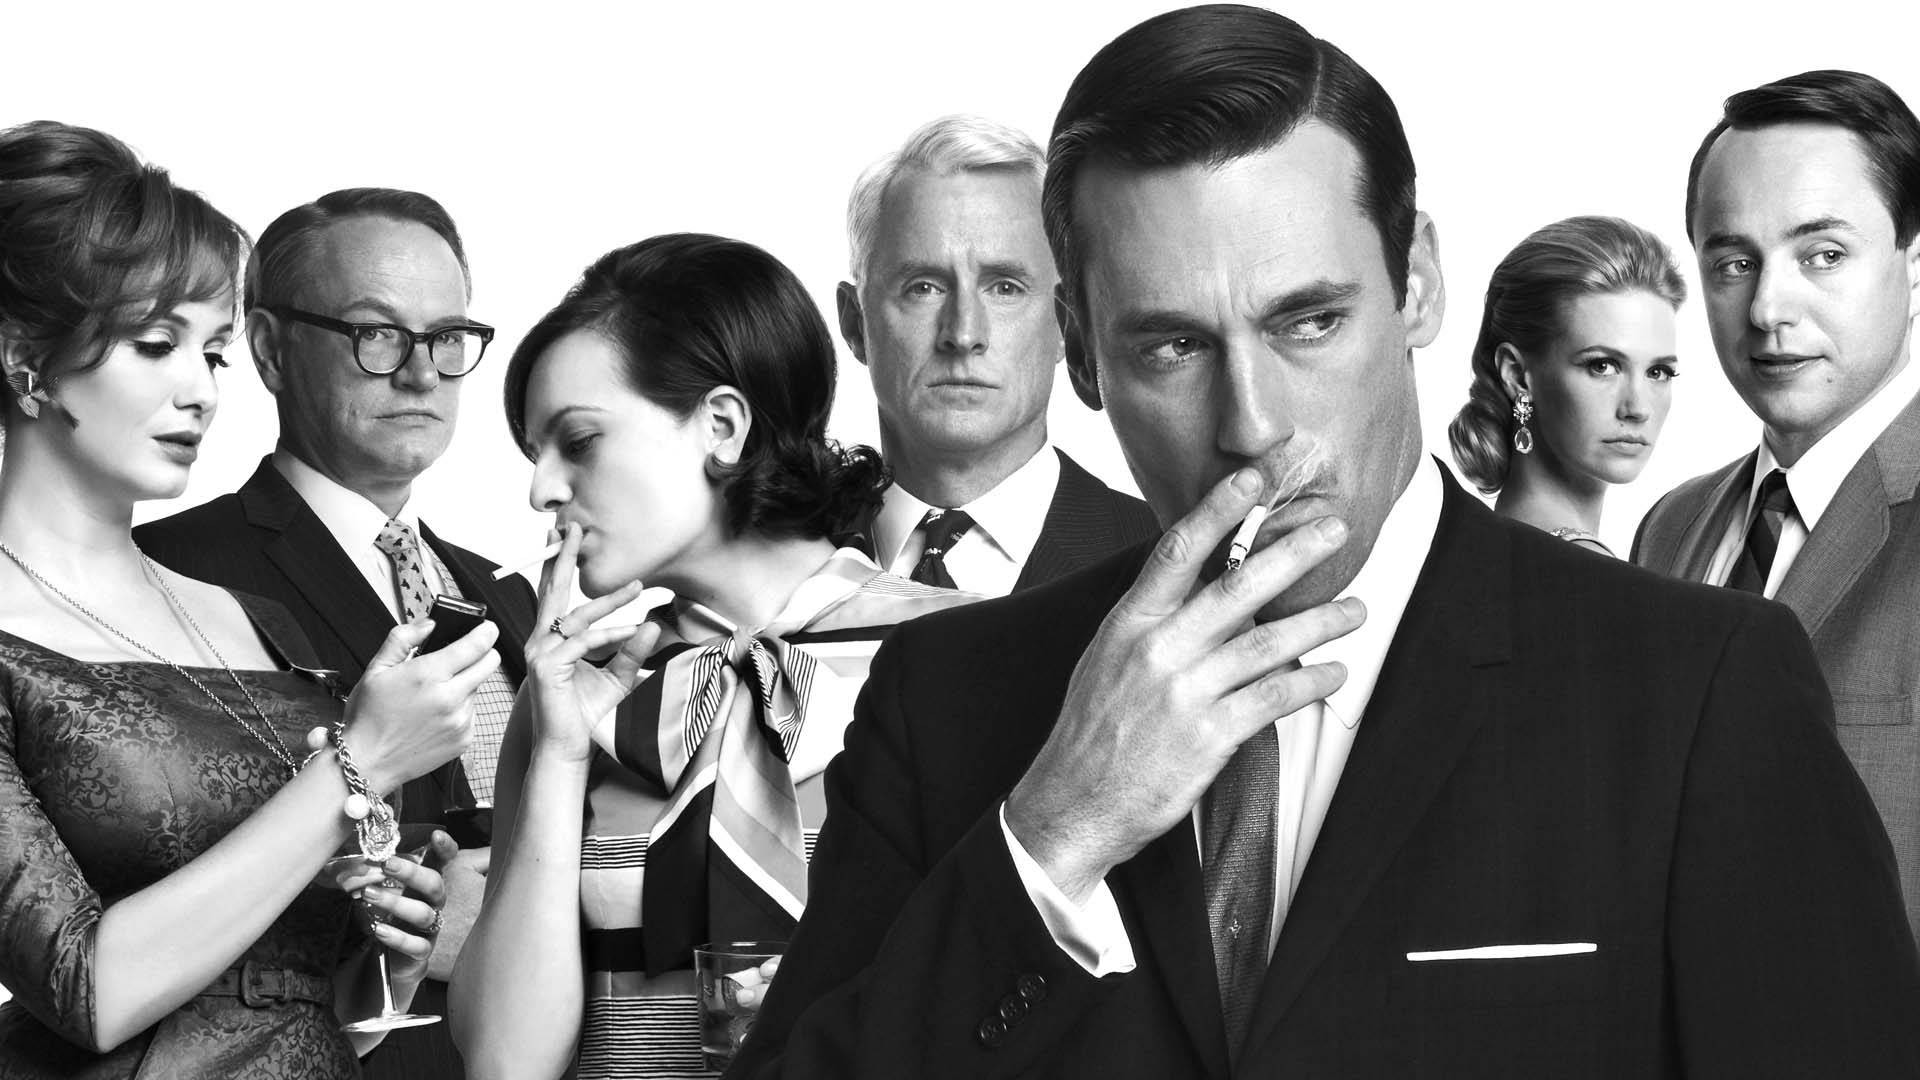 People 1920x1080 Mad Men smoking monochrome Don Draper TV series Jon Hamm Christina Hendricks men women